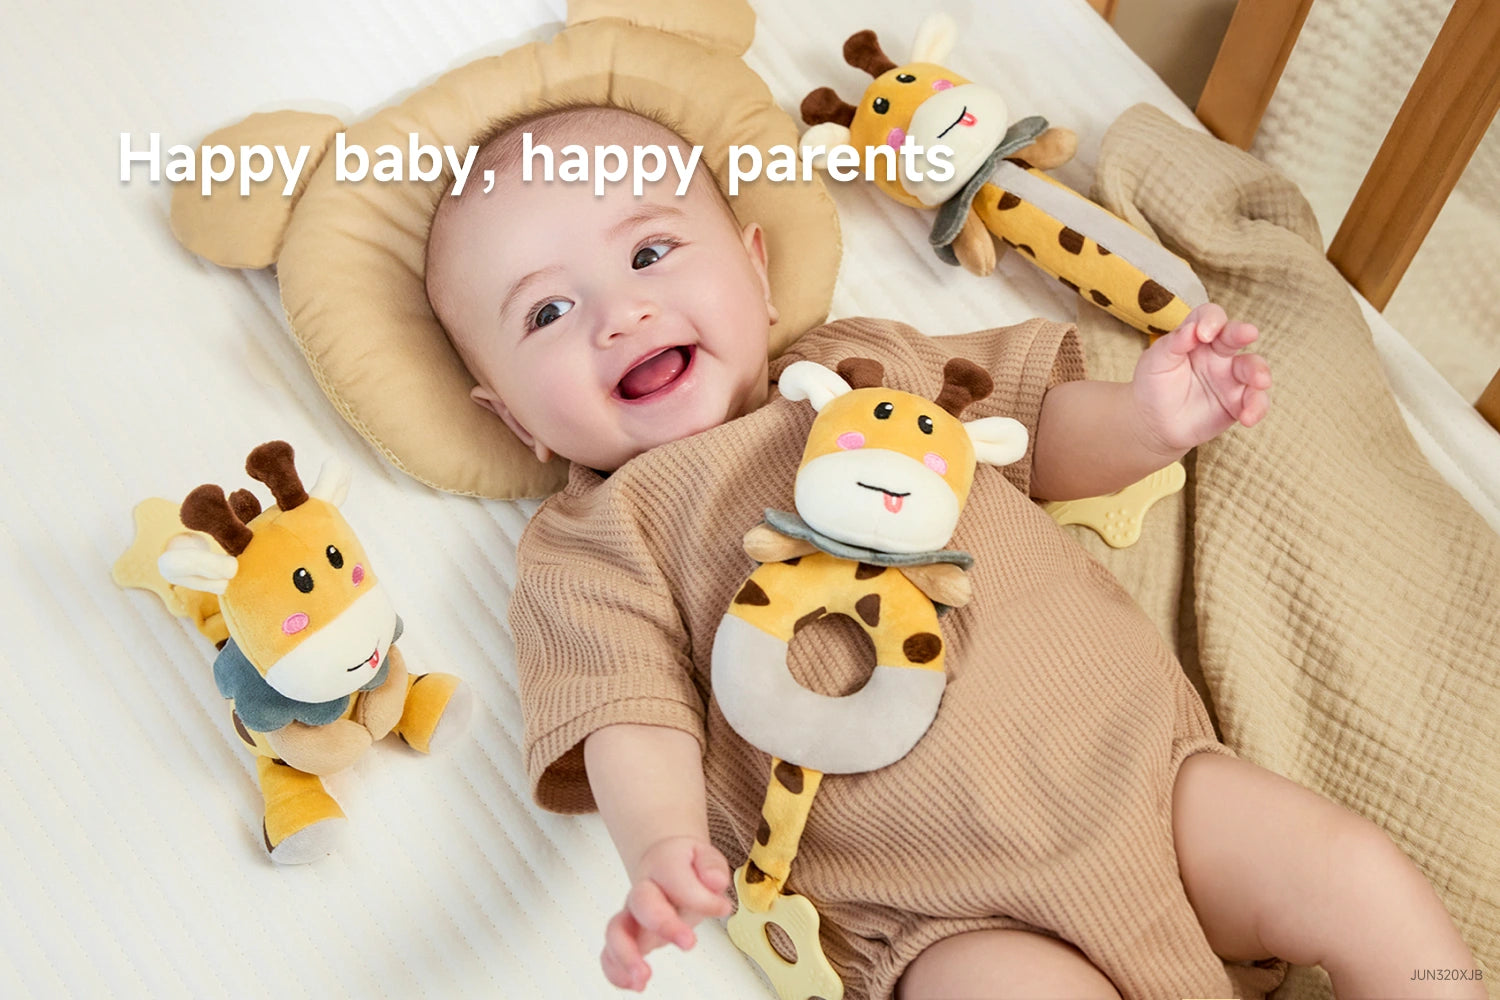 Soft teething ring giraffe plush set for baby_s oral comfort